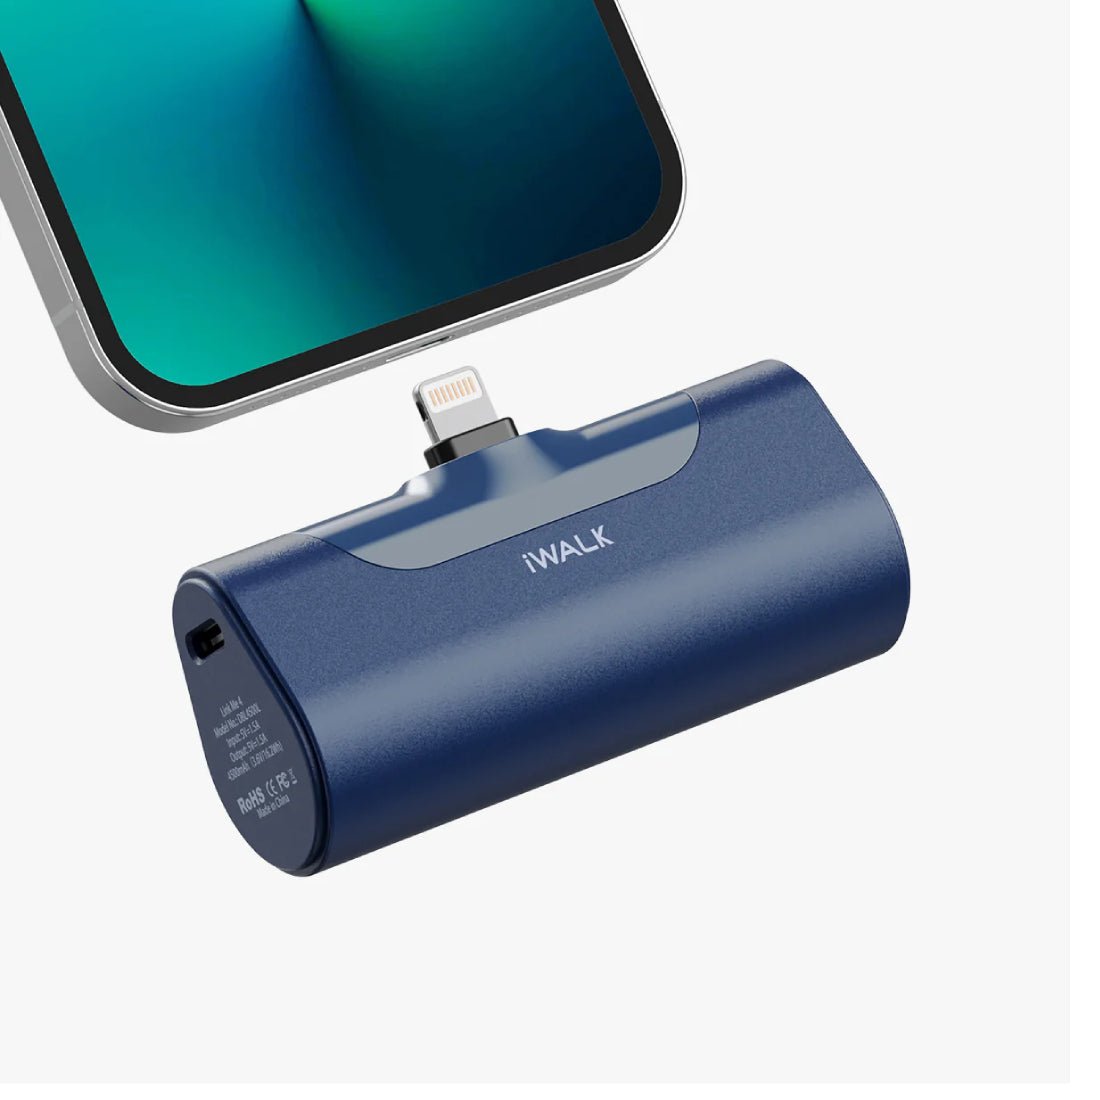 iWalk 4500mAh Portable Charger USB Lightening Battery Pack - Blue - مزود طاقة - Store 974 | ستور ٩٧٤